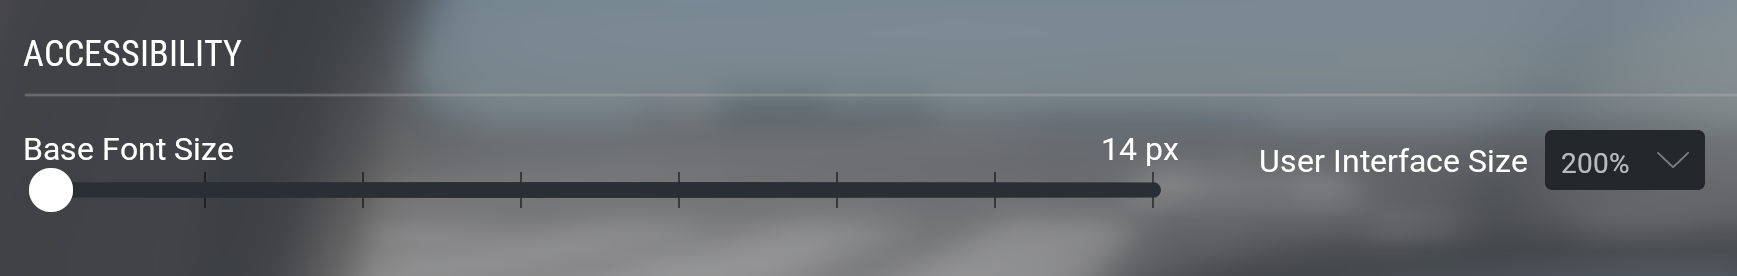 Screenshot of X-Plane accessibility settings